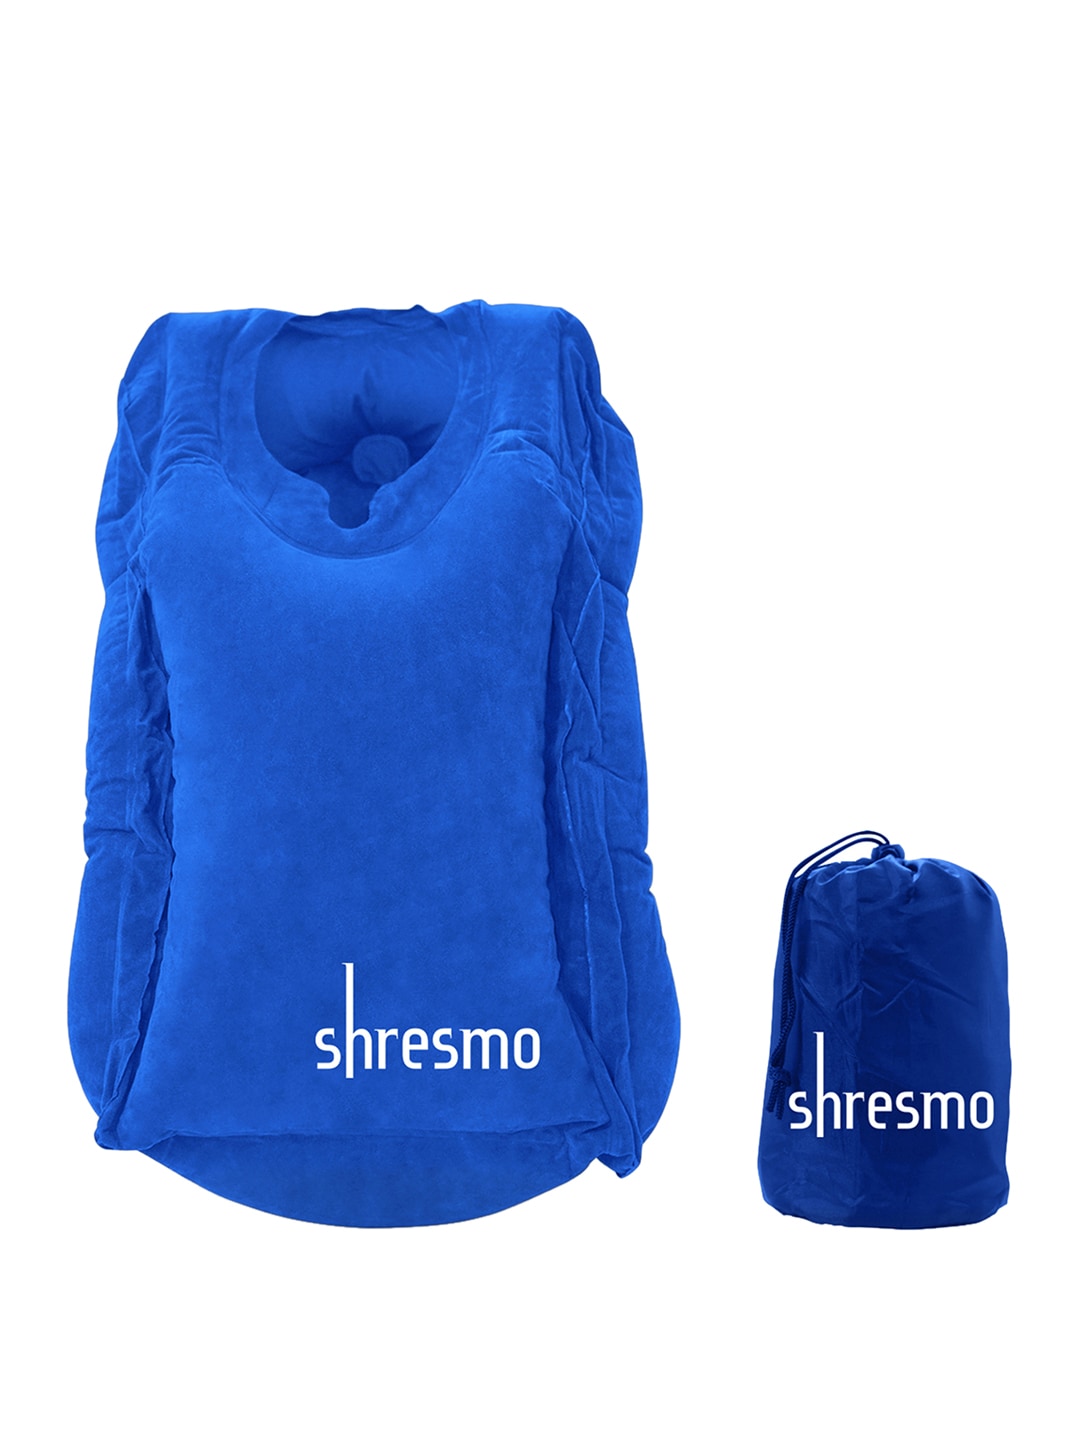 Shresmo Unisex Blue Travel Neck Pillow Price in India